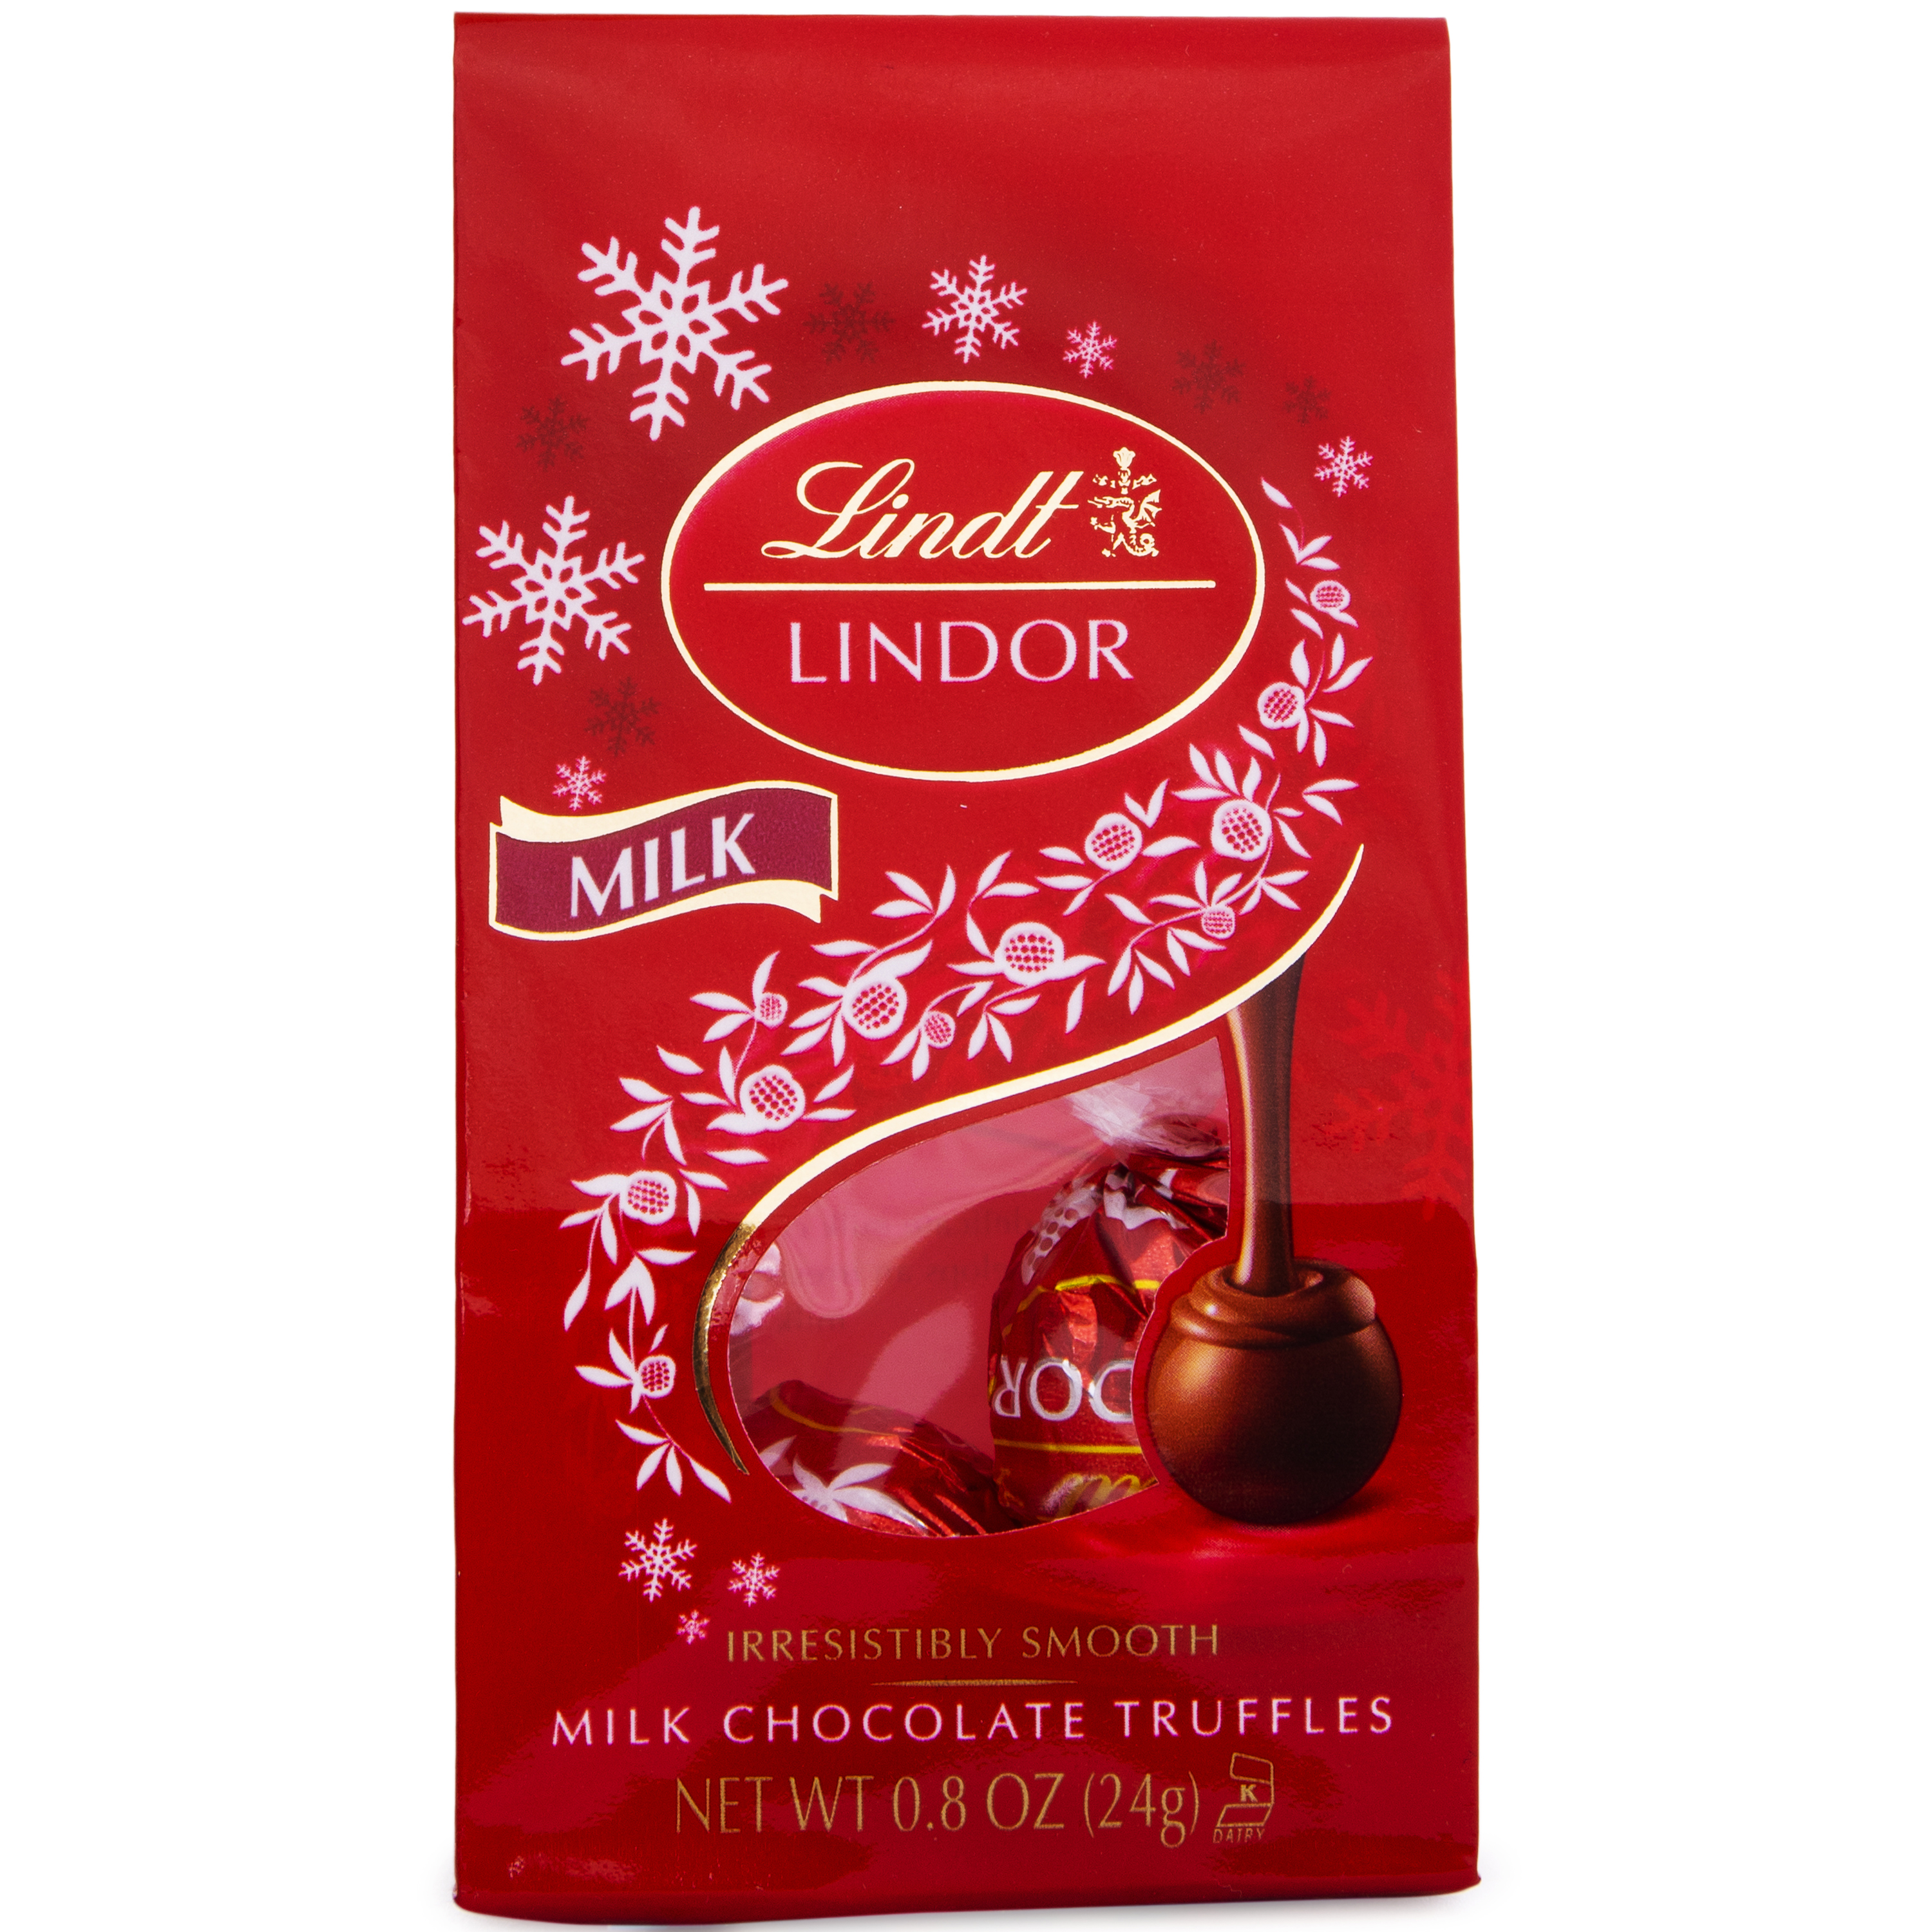 Lindt Lindor Milk Chocolate Truffles 0.8oz